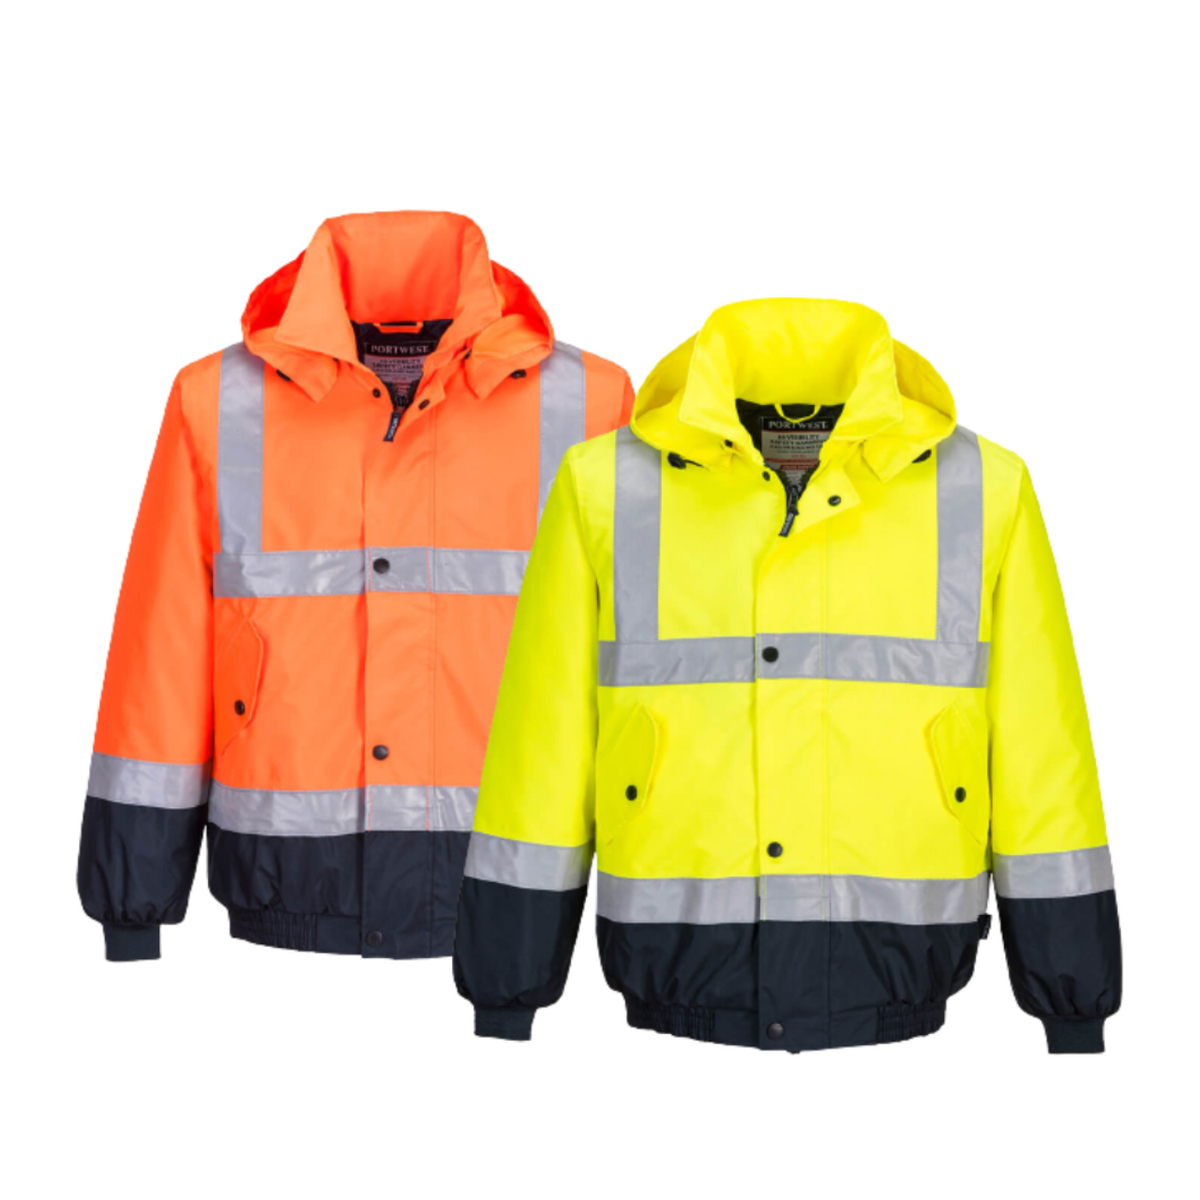 Portwest Hi-Vis Flying Jacket 2 Tone Waterproof Reflective Safety Work MJ204-Collins Clothing Co